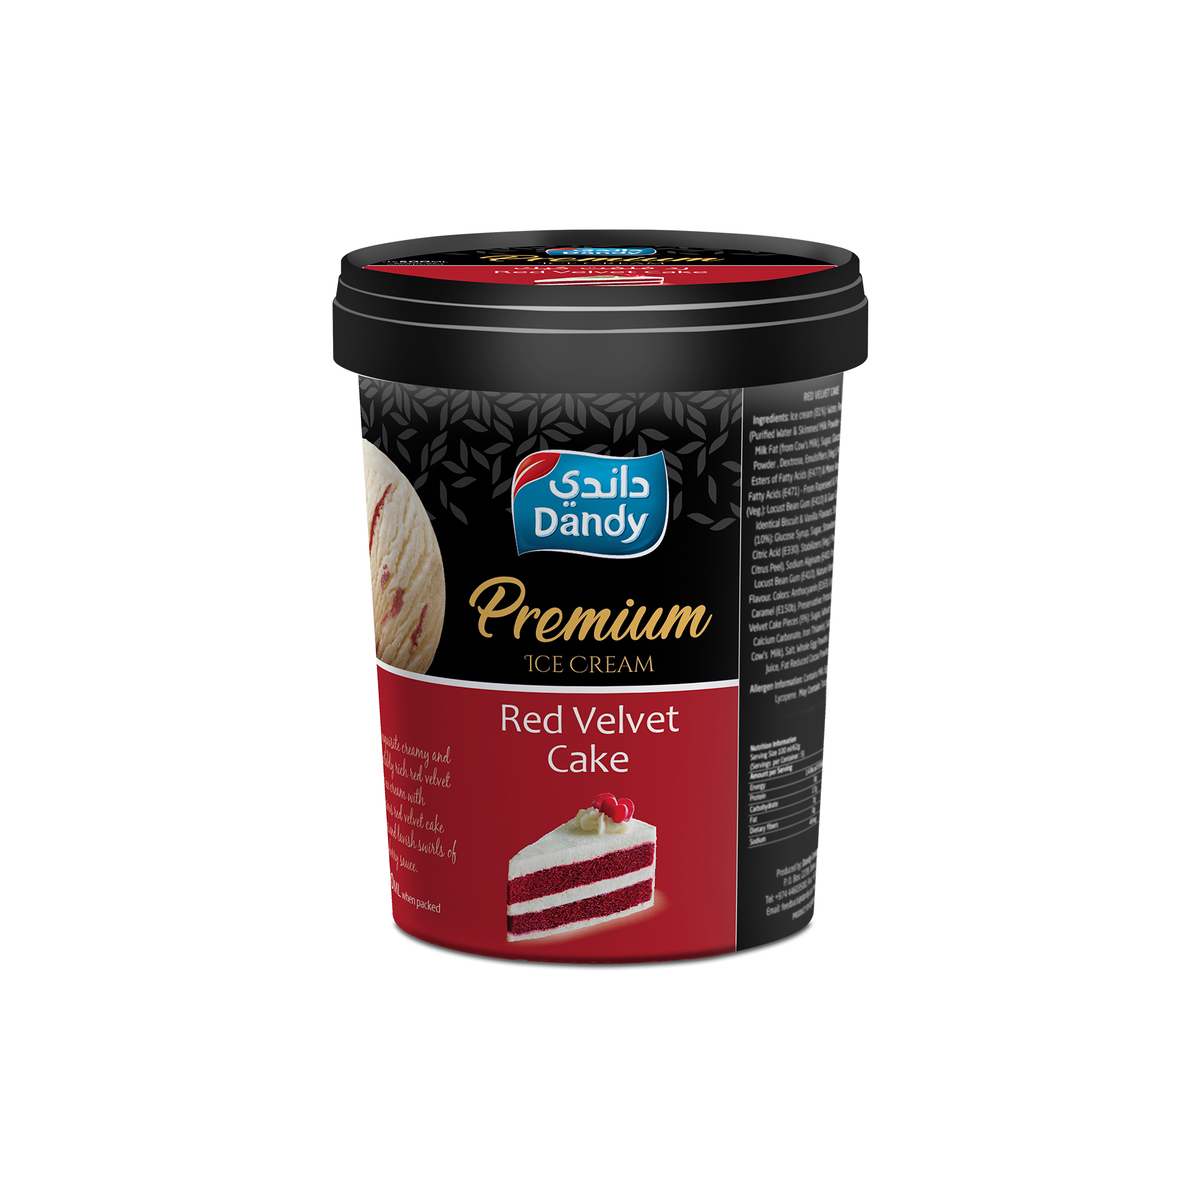 Dandy Premium Ice Cream Red Velvet Cake 500ml